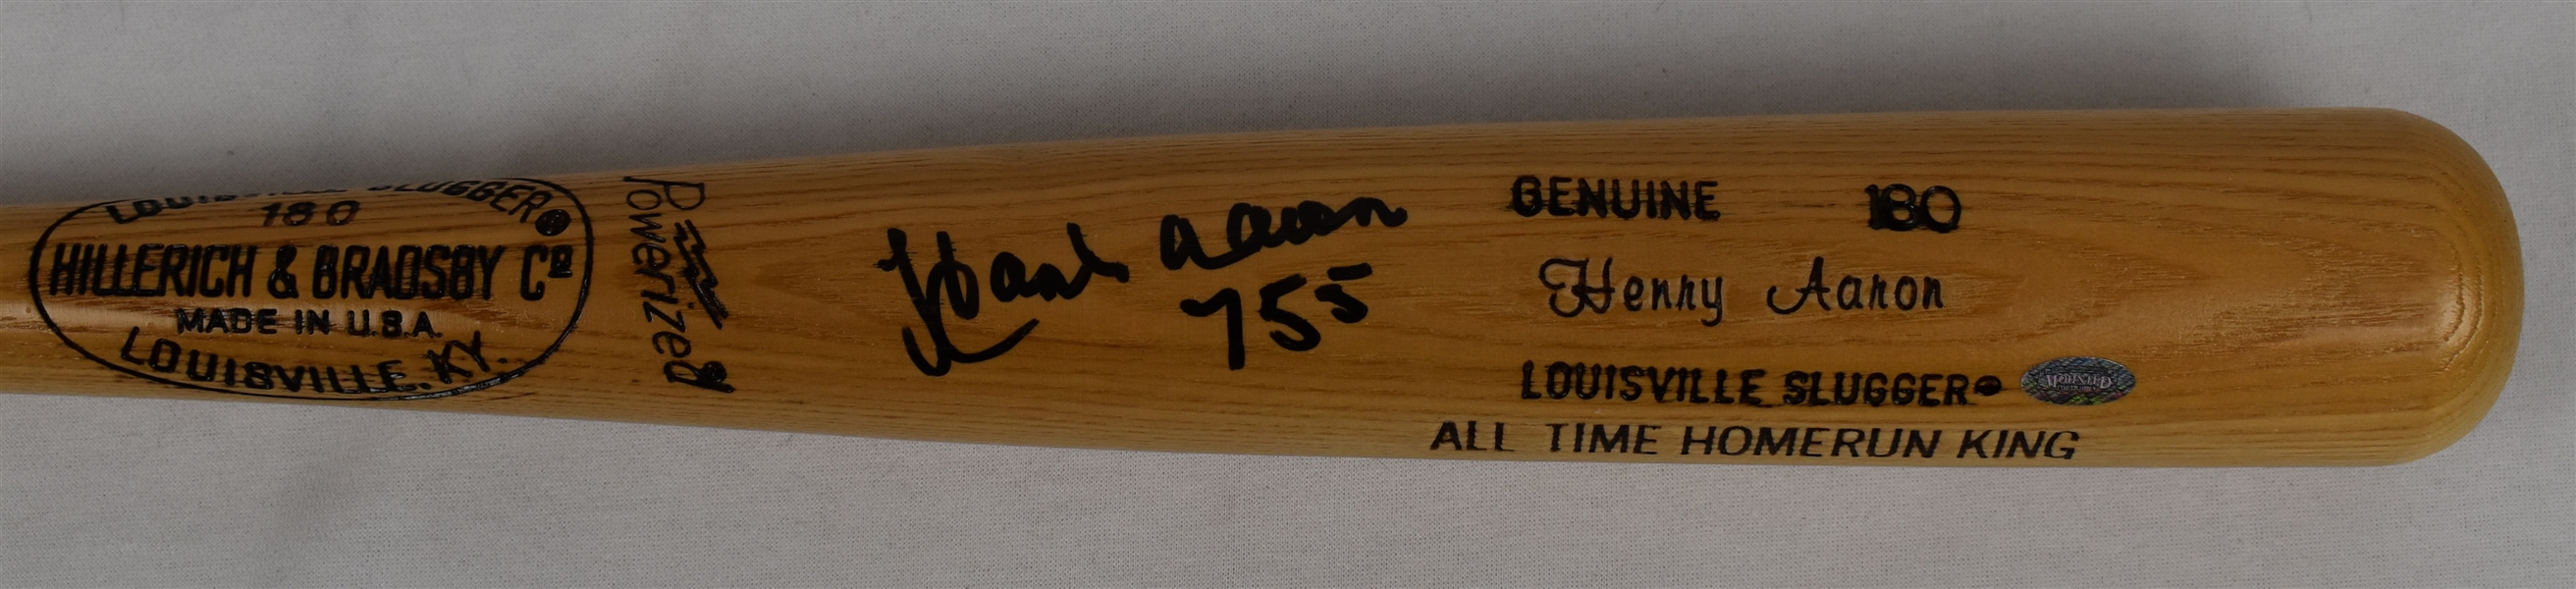 Hank Aaron Autographed & Inscribed 755th HR Bat 